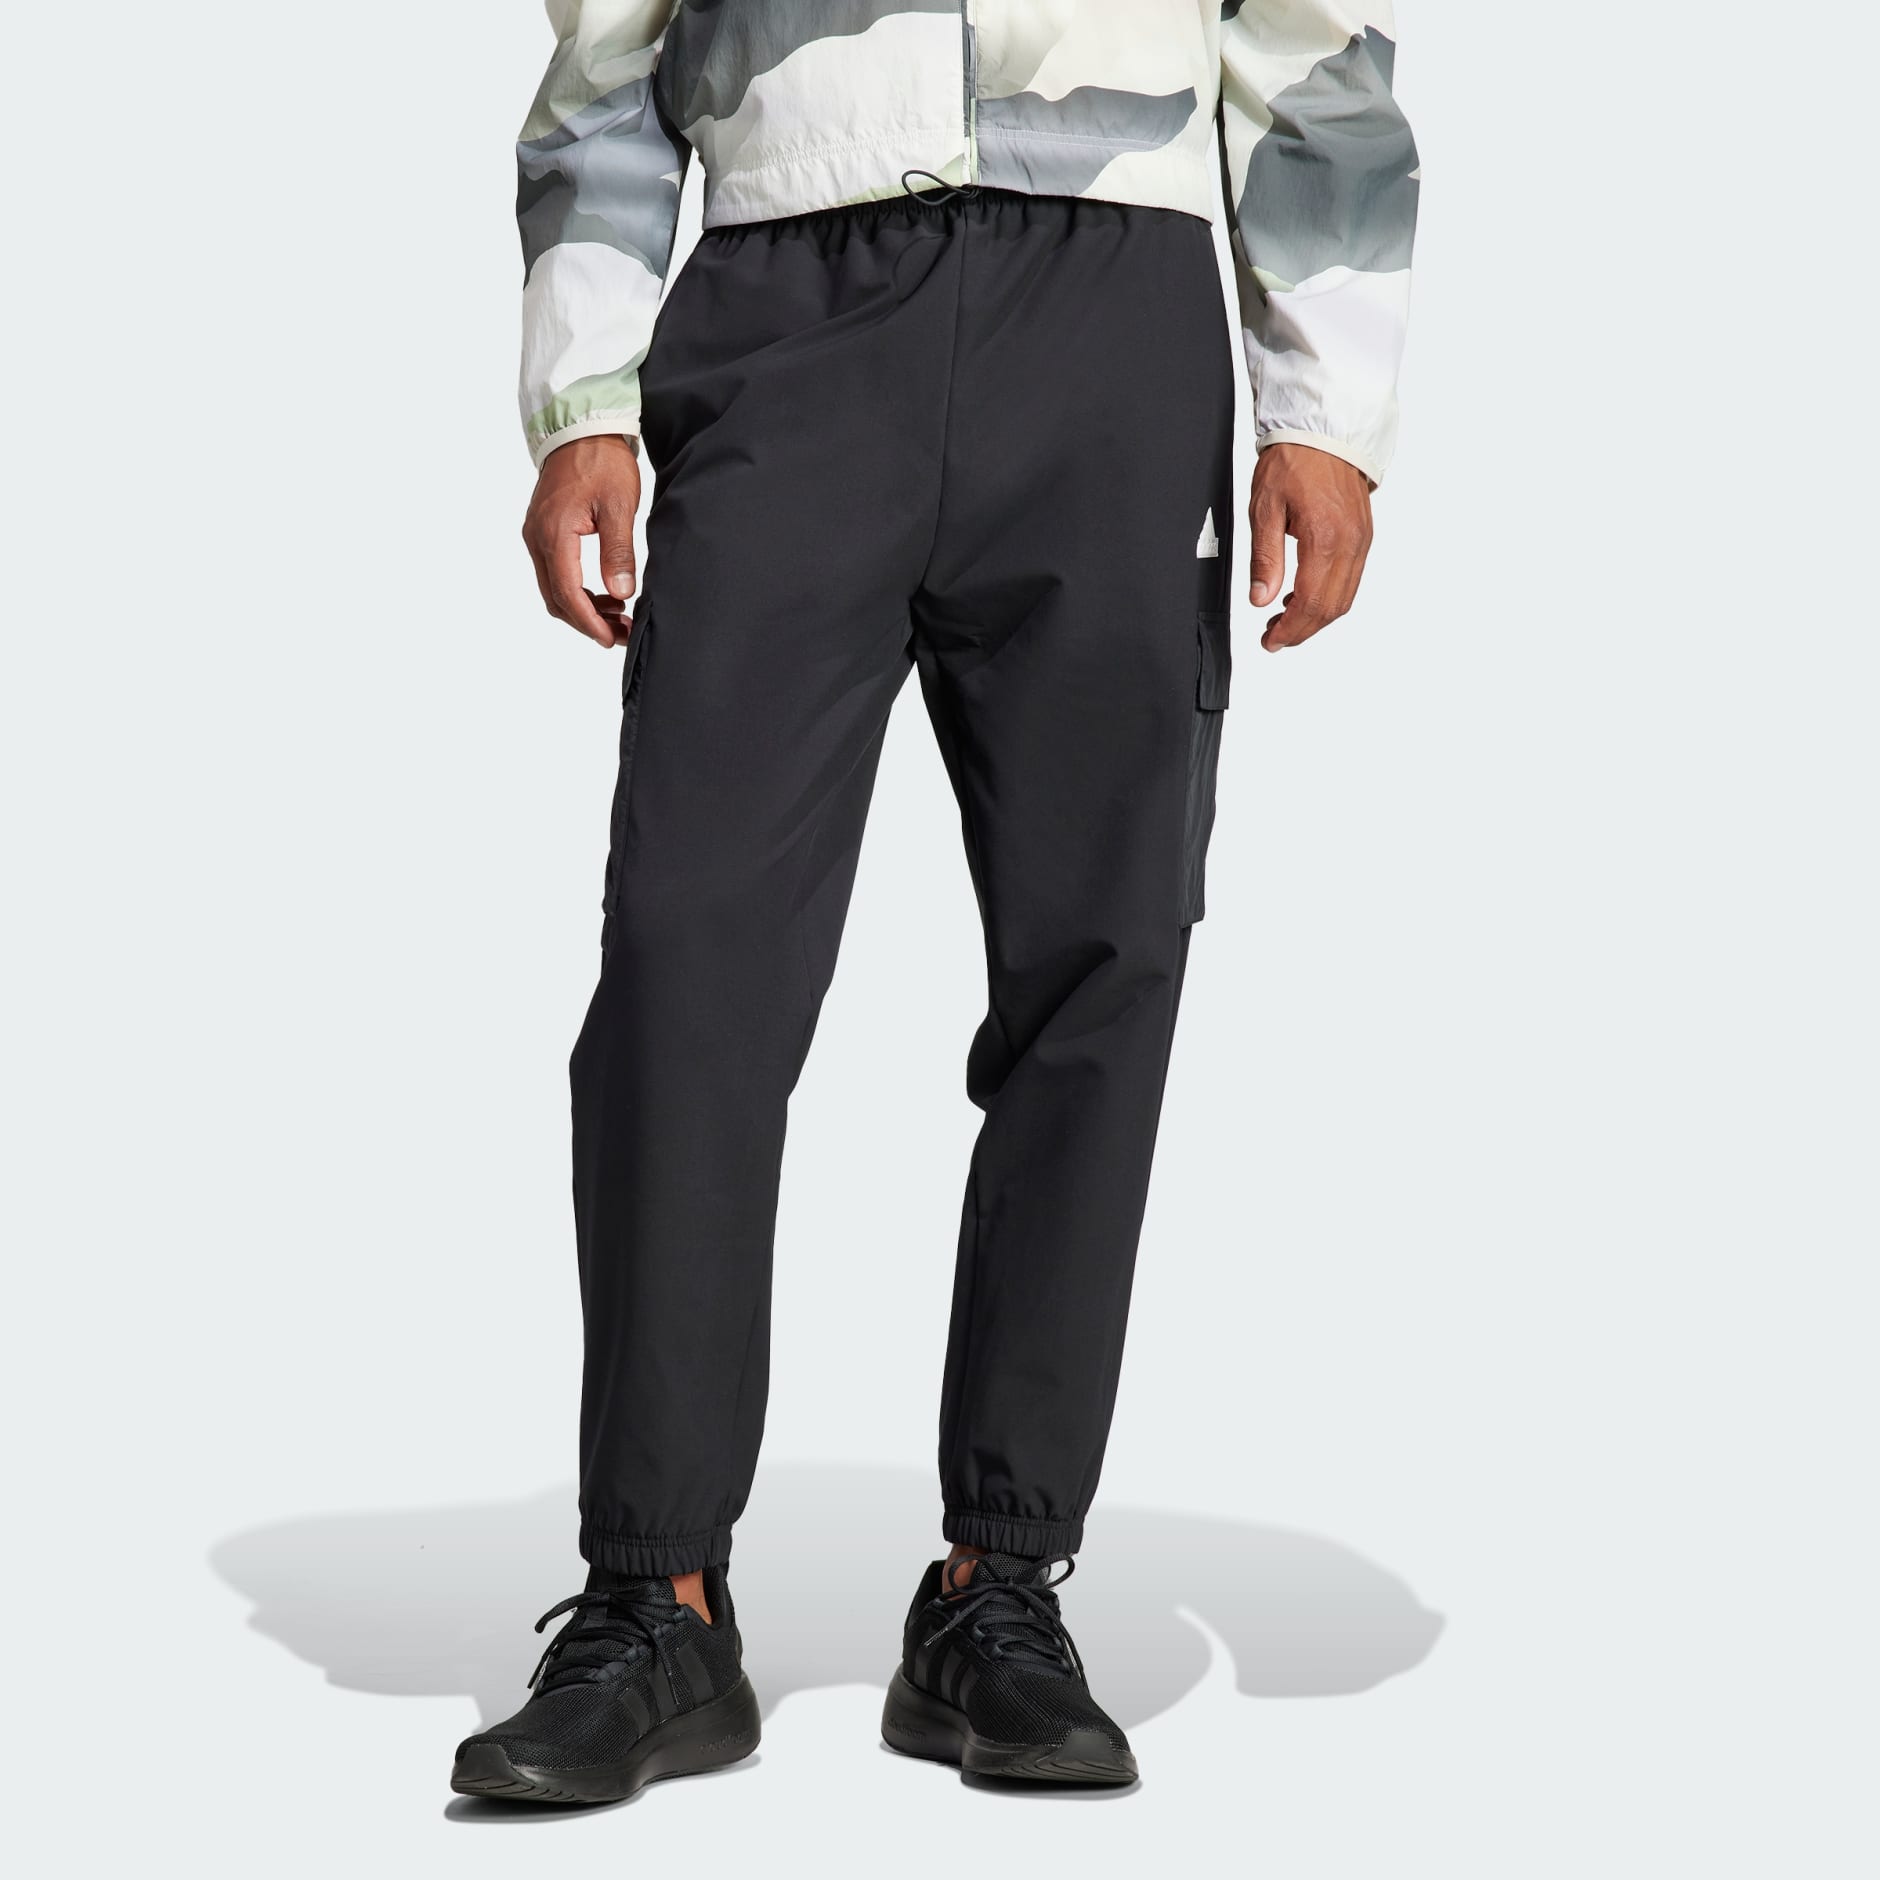 Clothing - City Escape Premium Cargo Pants - Black | adidas South Africa